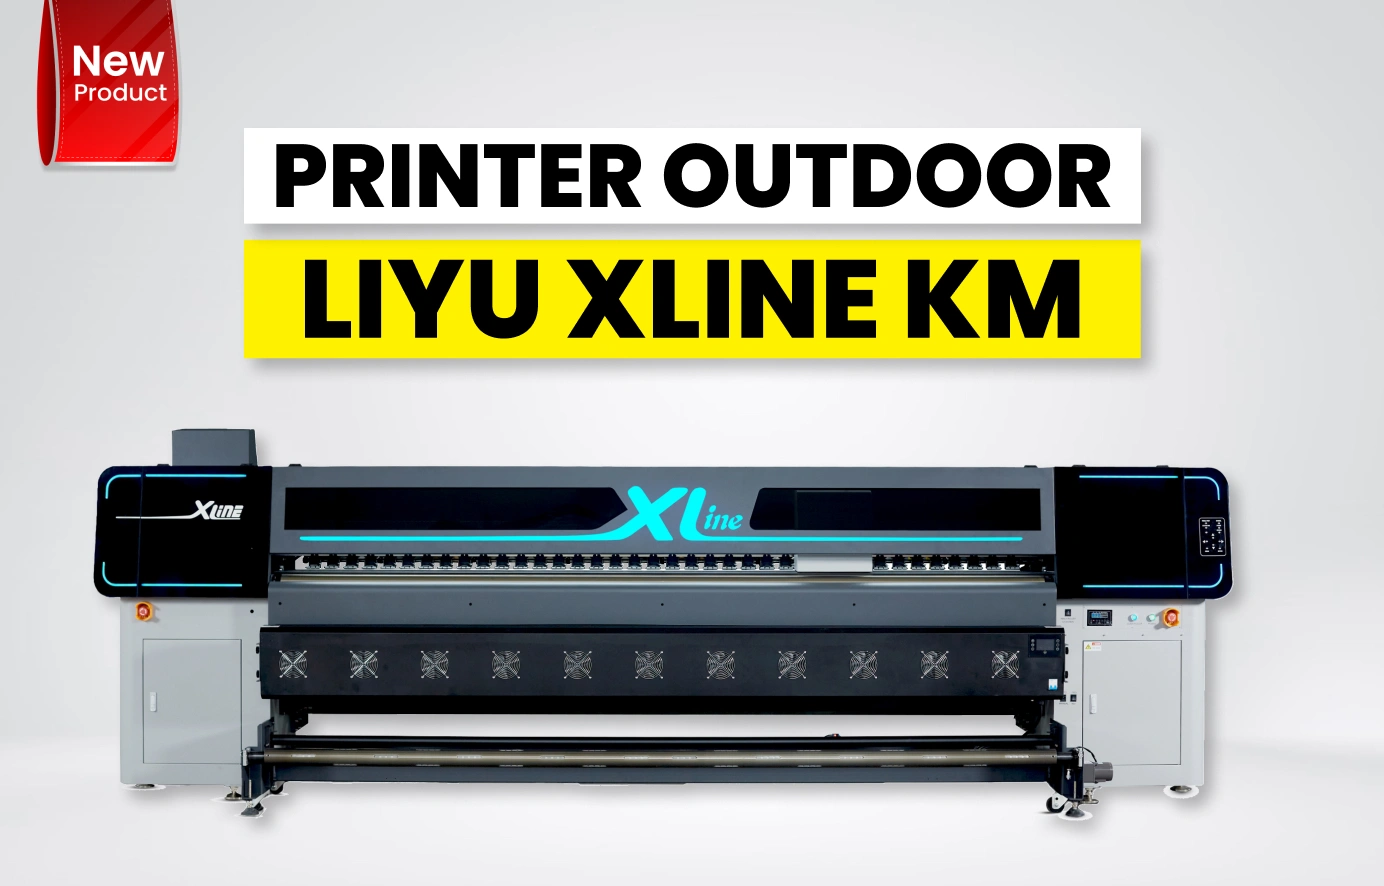 Printer Outdoor Liyu Xline Km